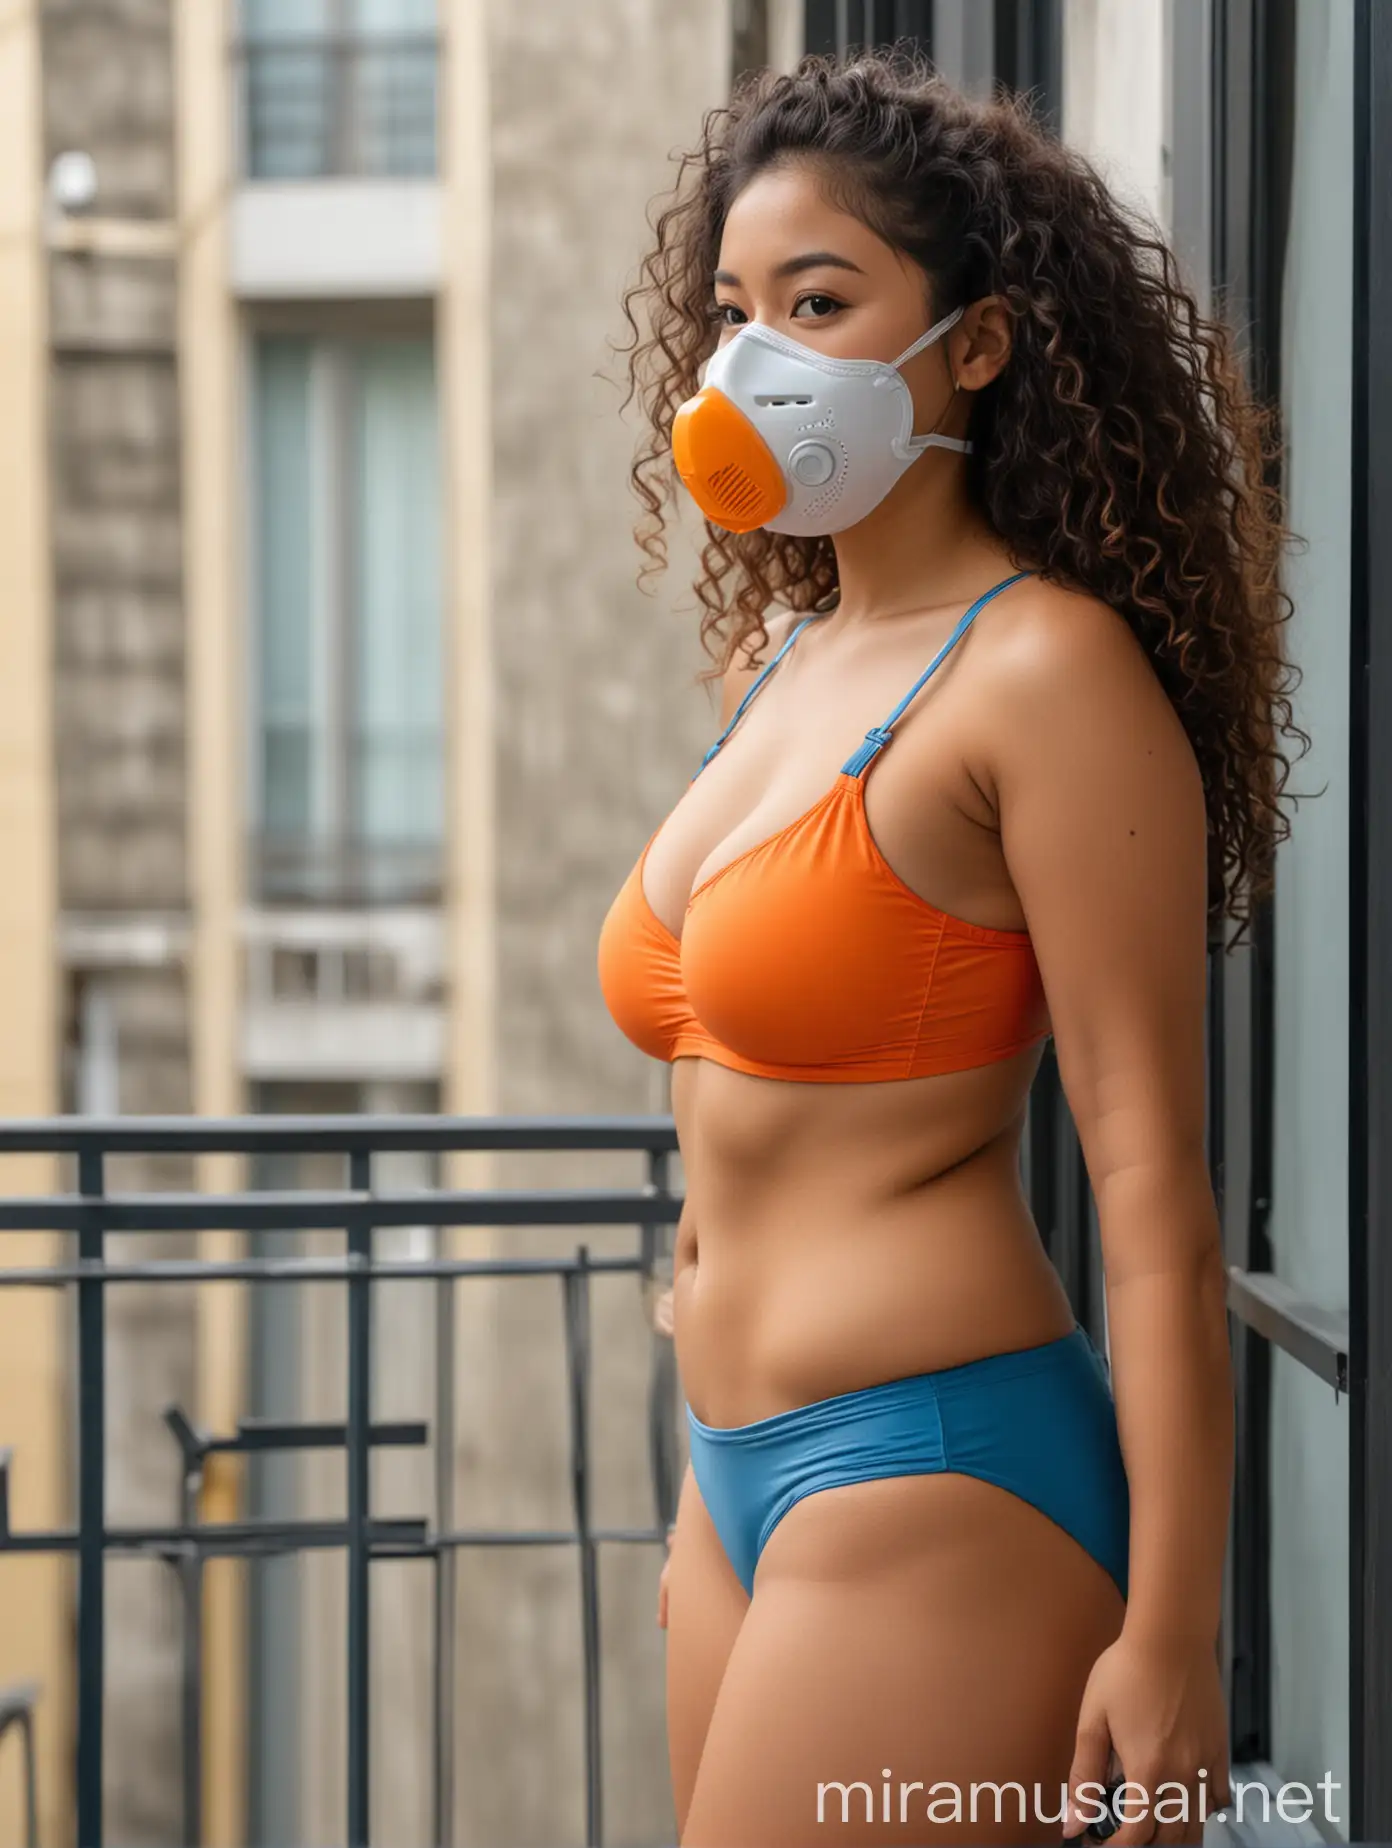 Filipino Woman in Respirator Mask Standing on Balcony in Sporty Attire